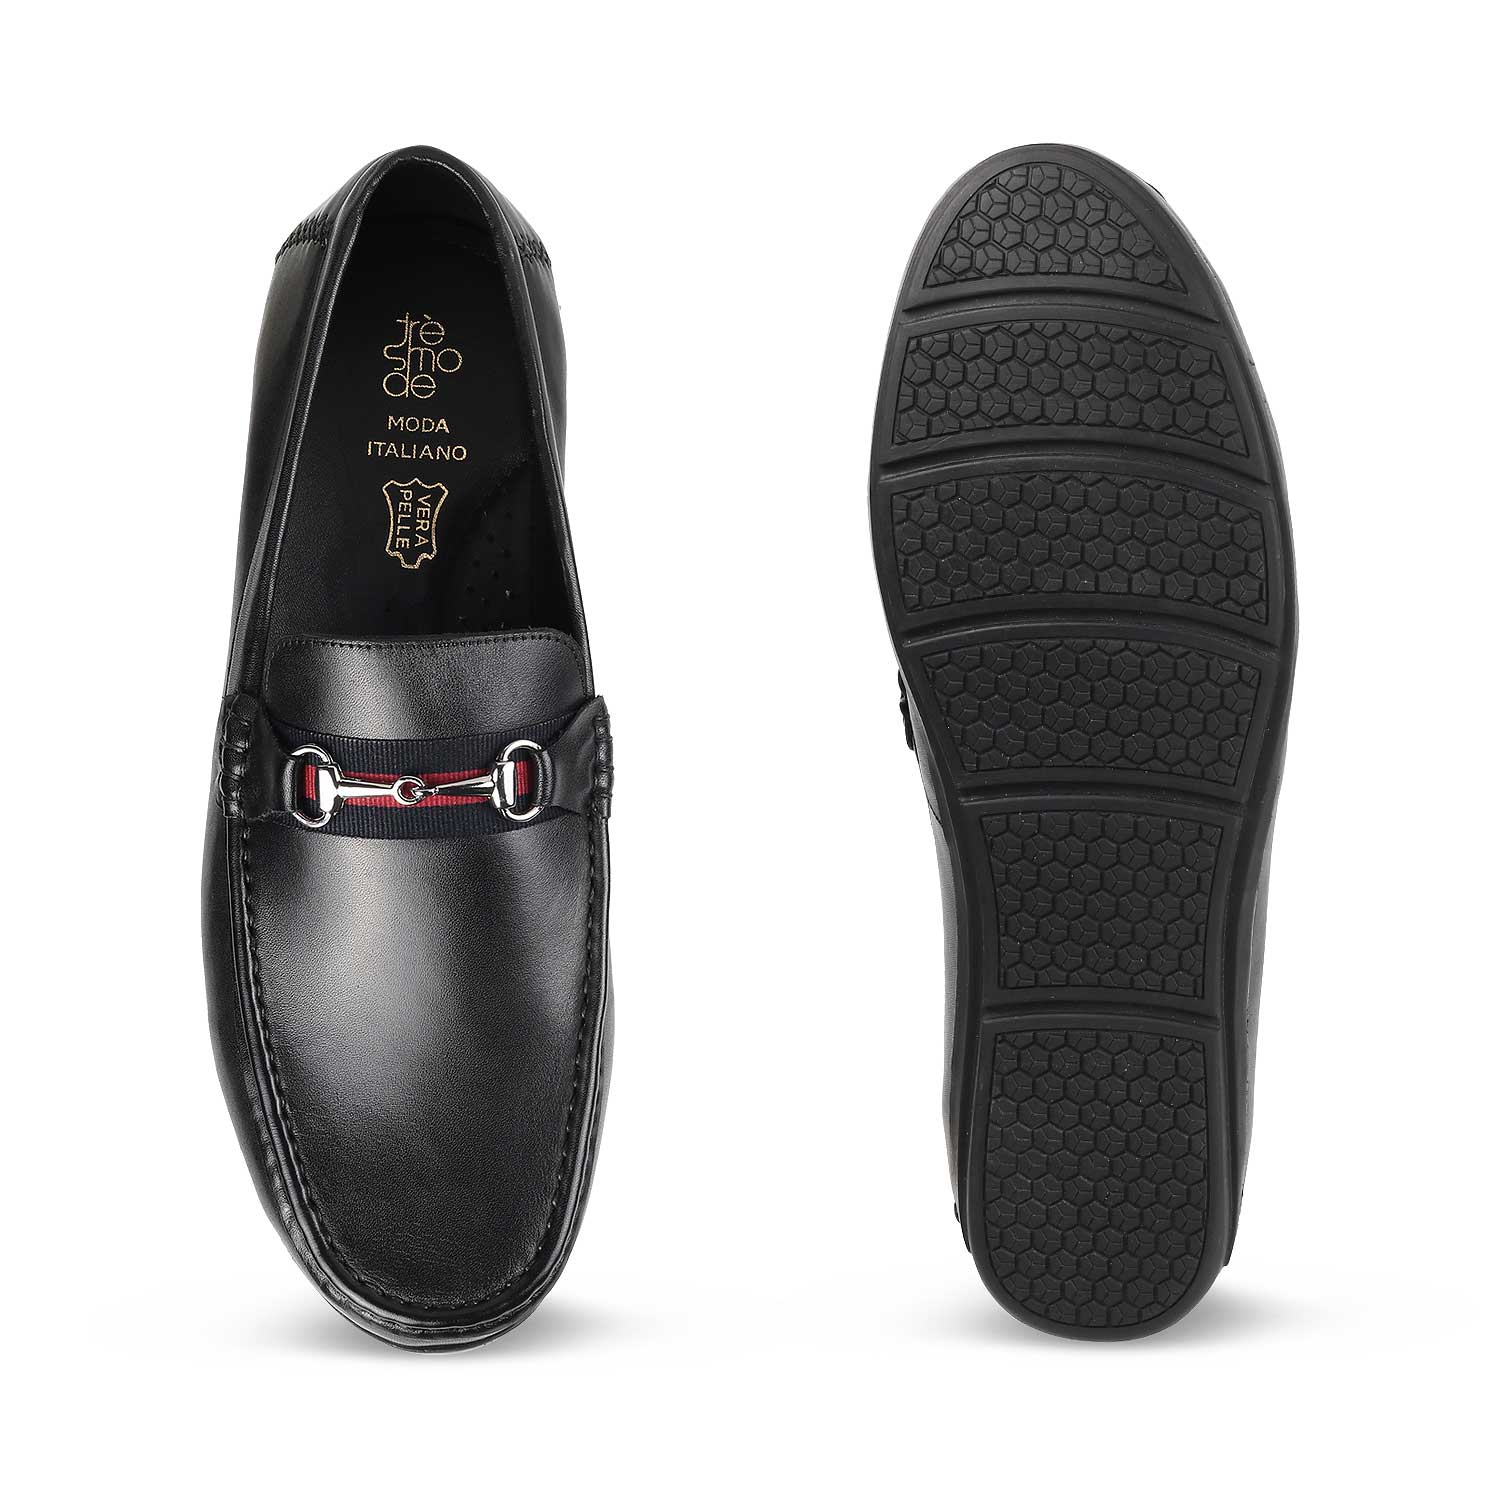 Crada Black Men's Leather Loafers Online at Tresmode.com